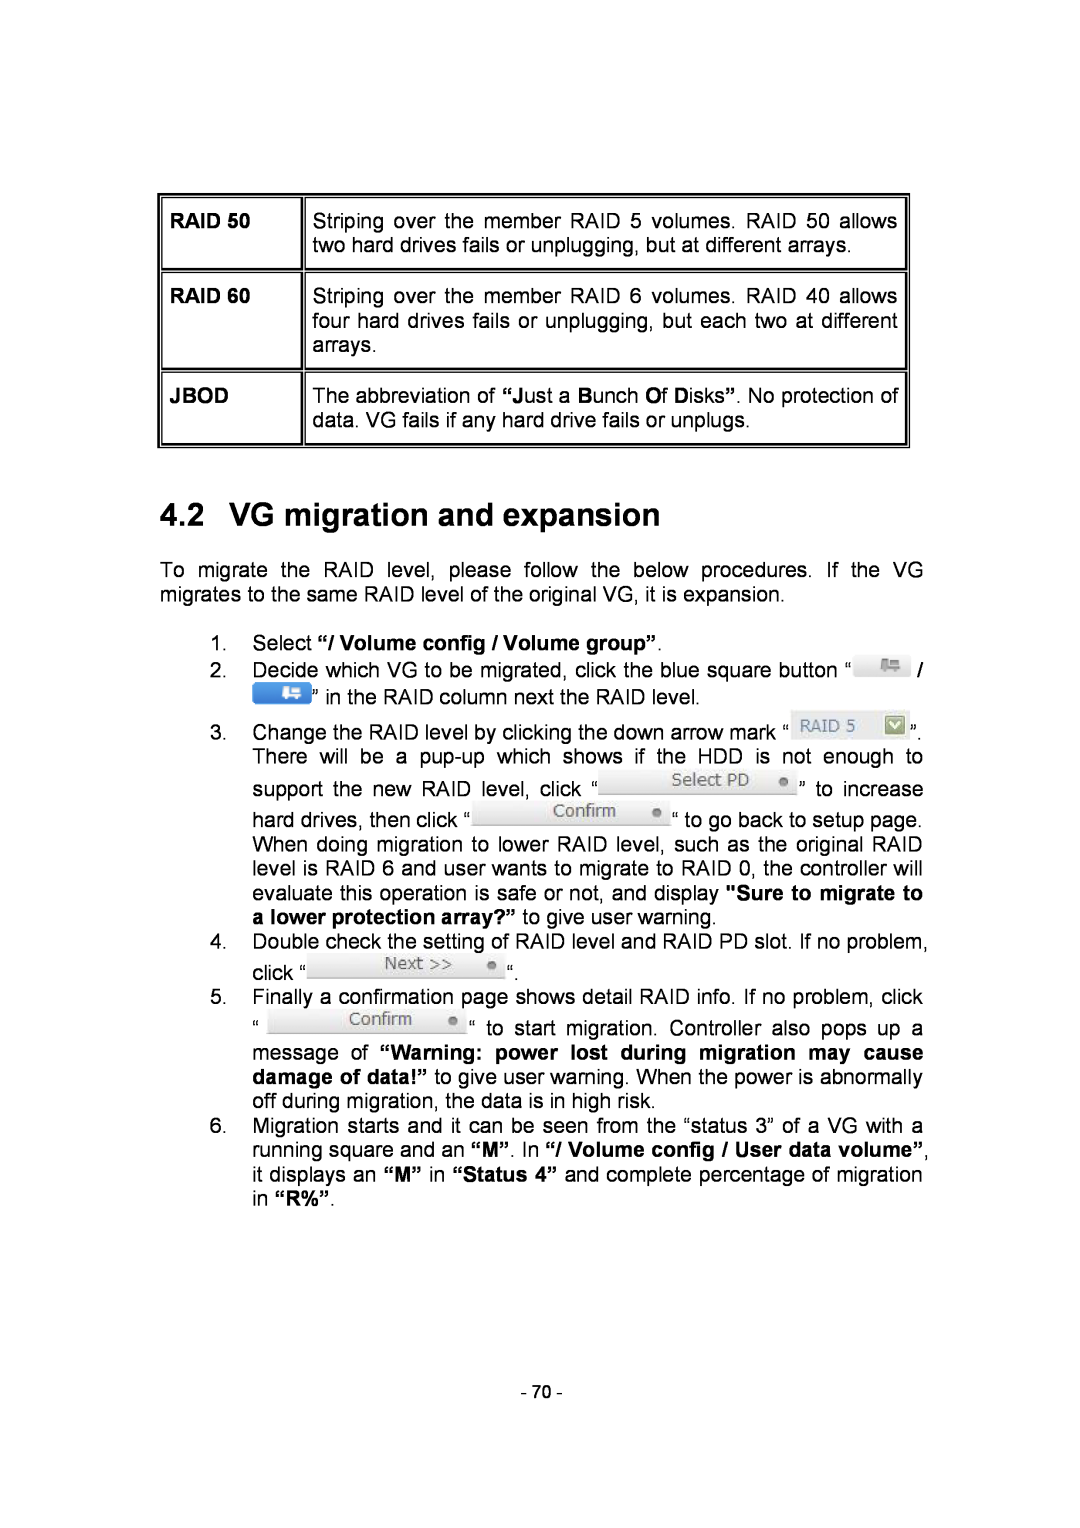 APC SCSI-SATA II manual VG migration and expansion, Raid Raid Jbod, Select “/ Volume config / Volume group” 